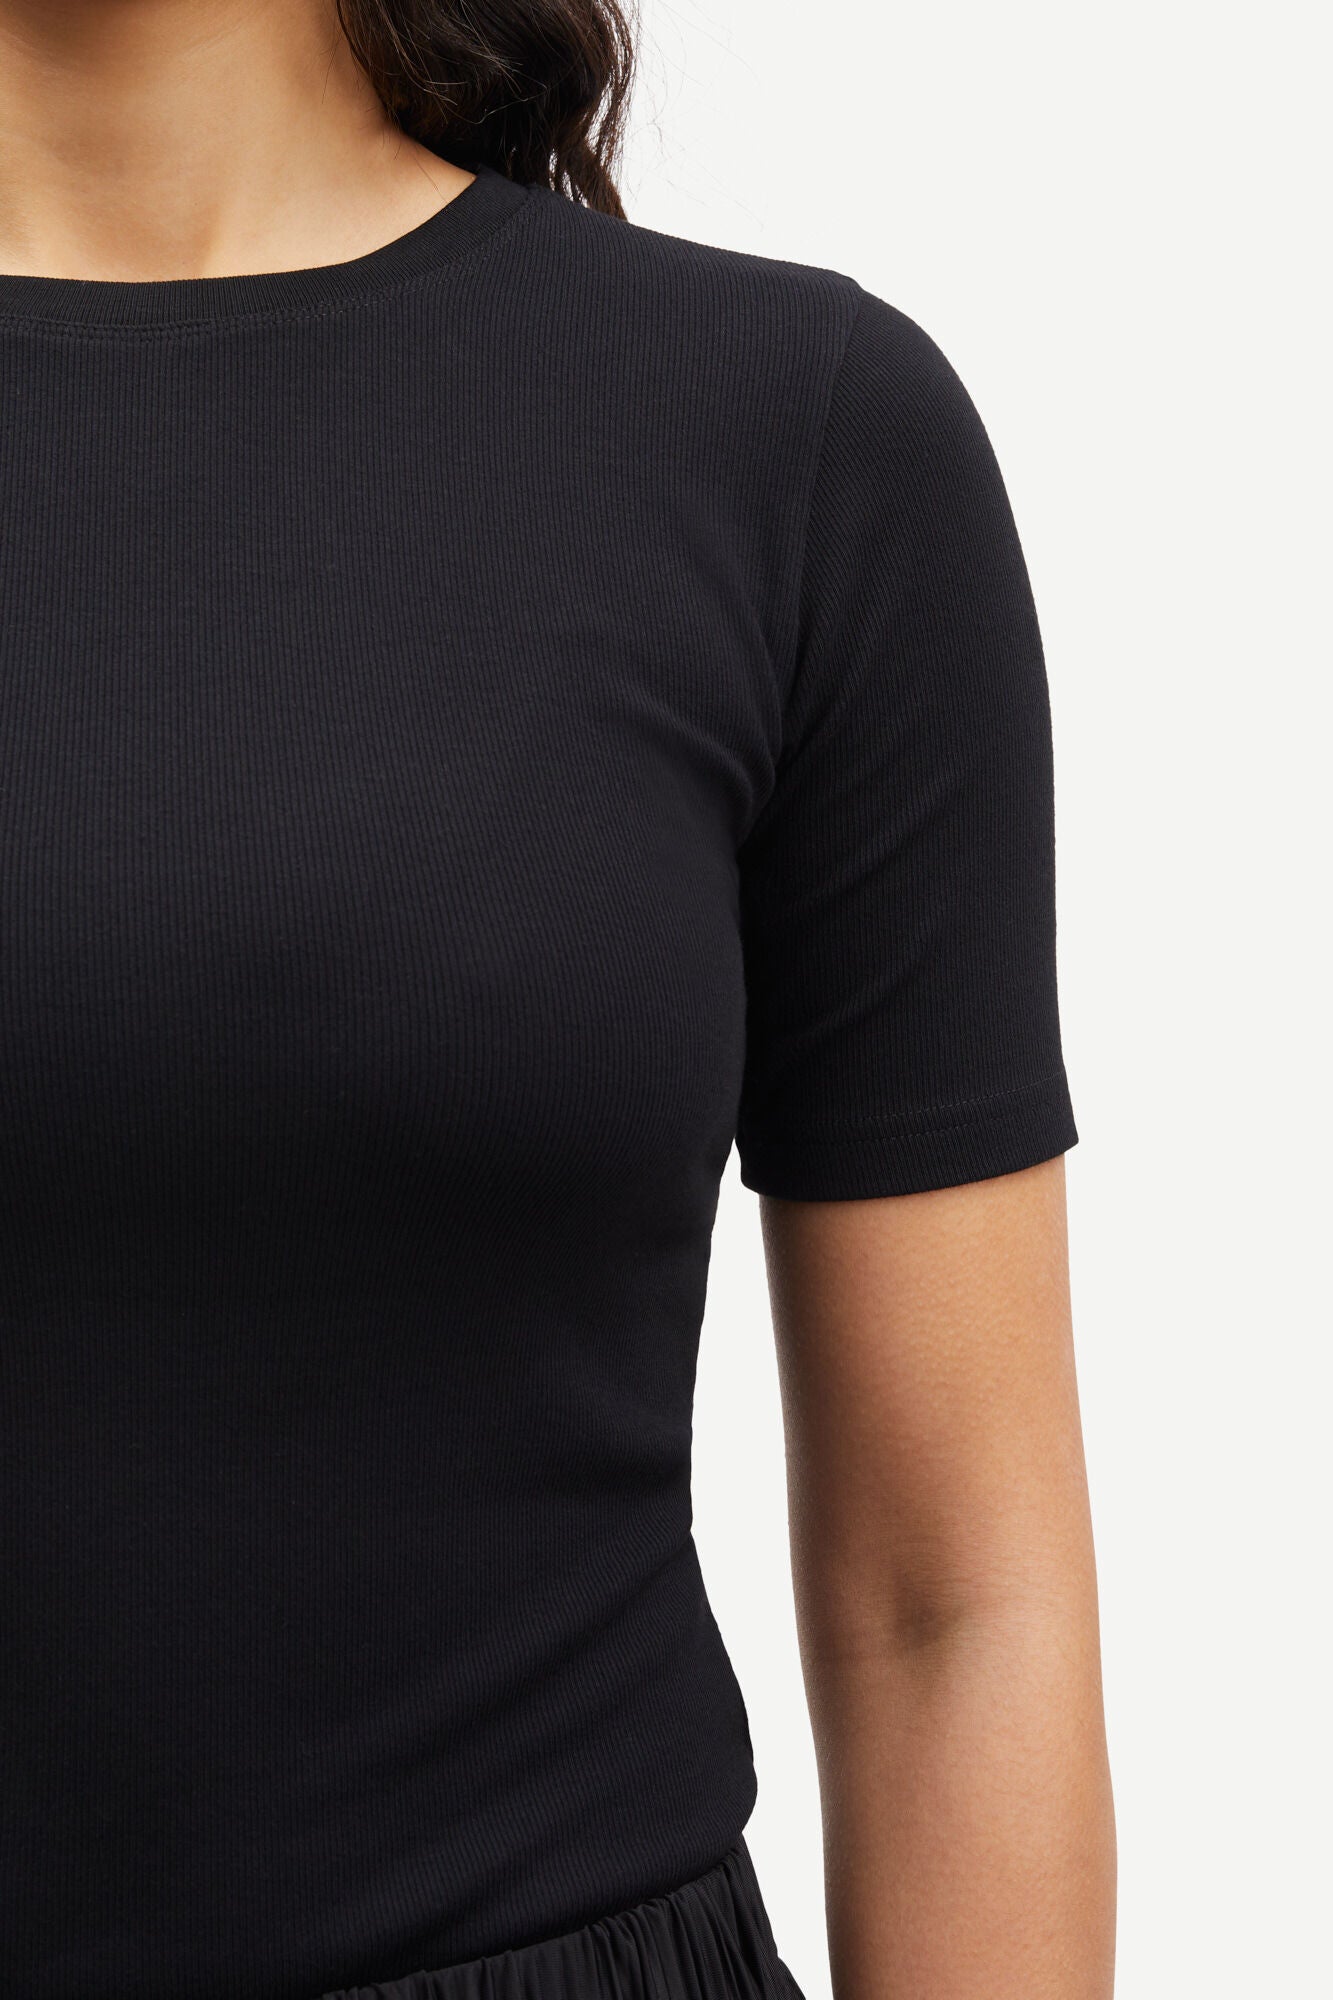 Short sleeved t-shirt in black